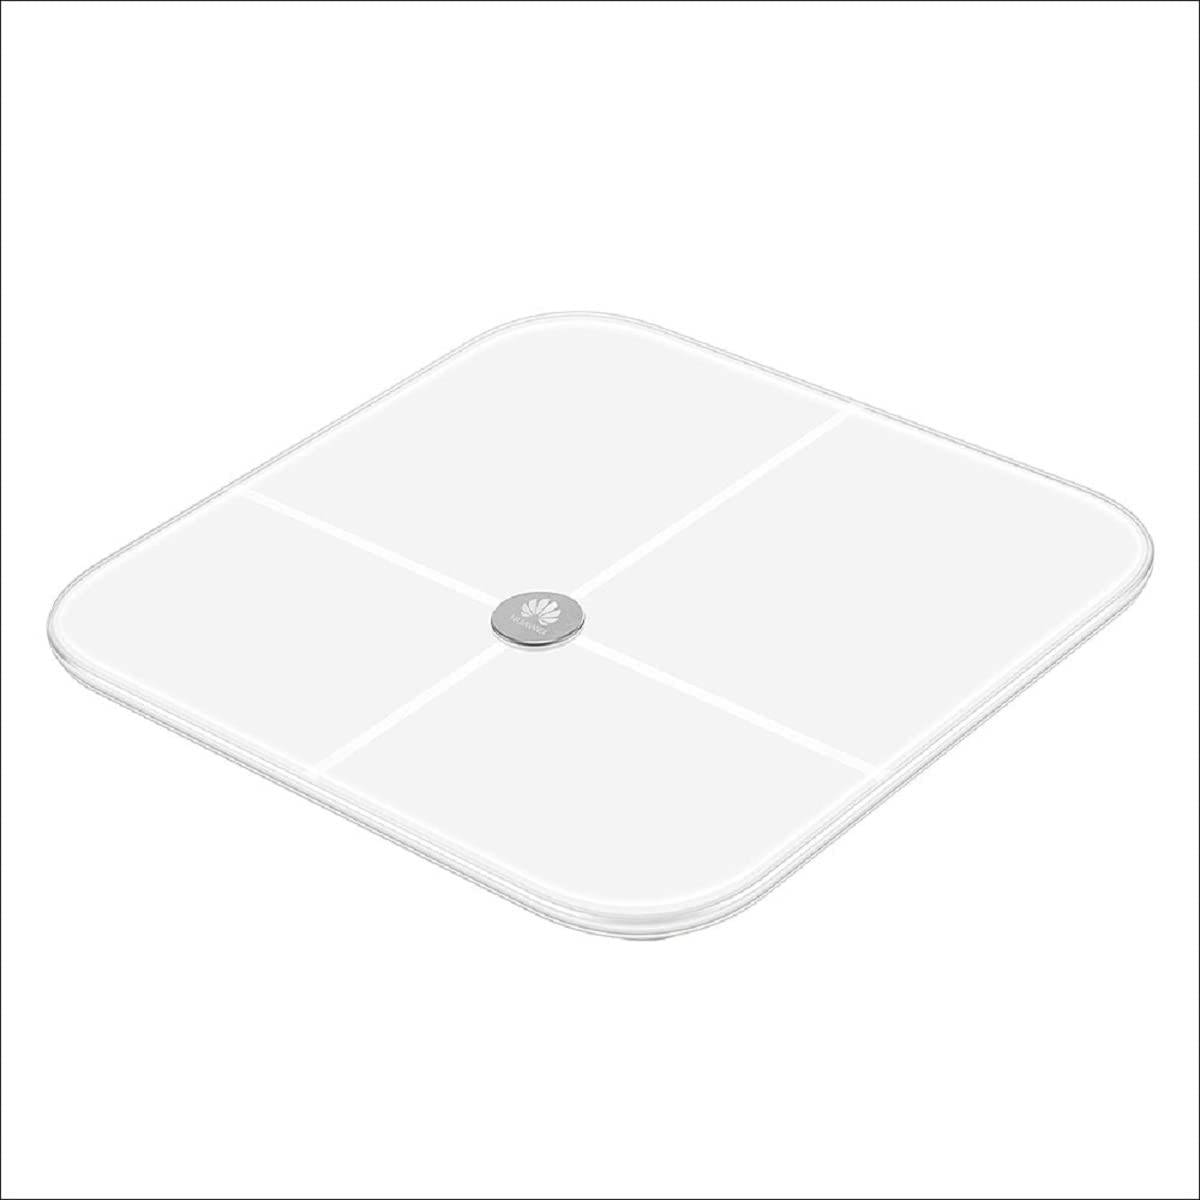 Huawei AH100 Digital Body Fat Scale, White